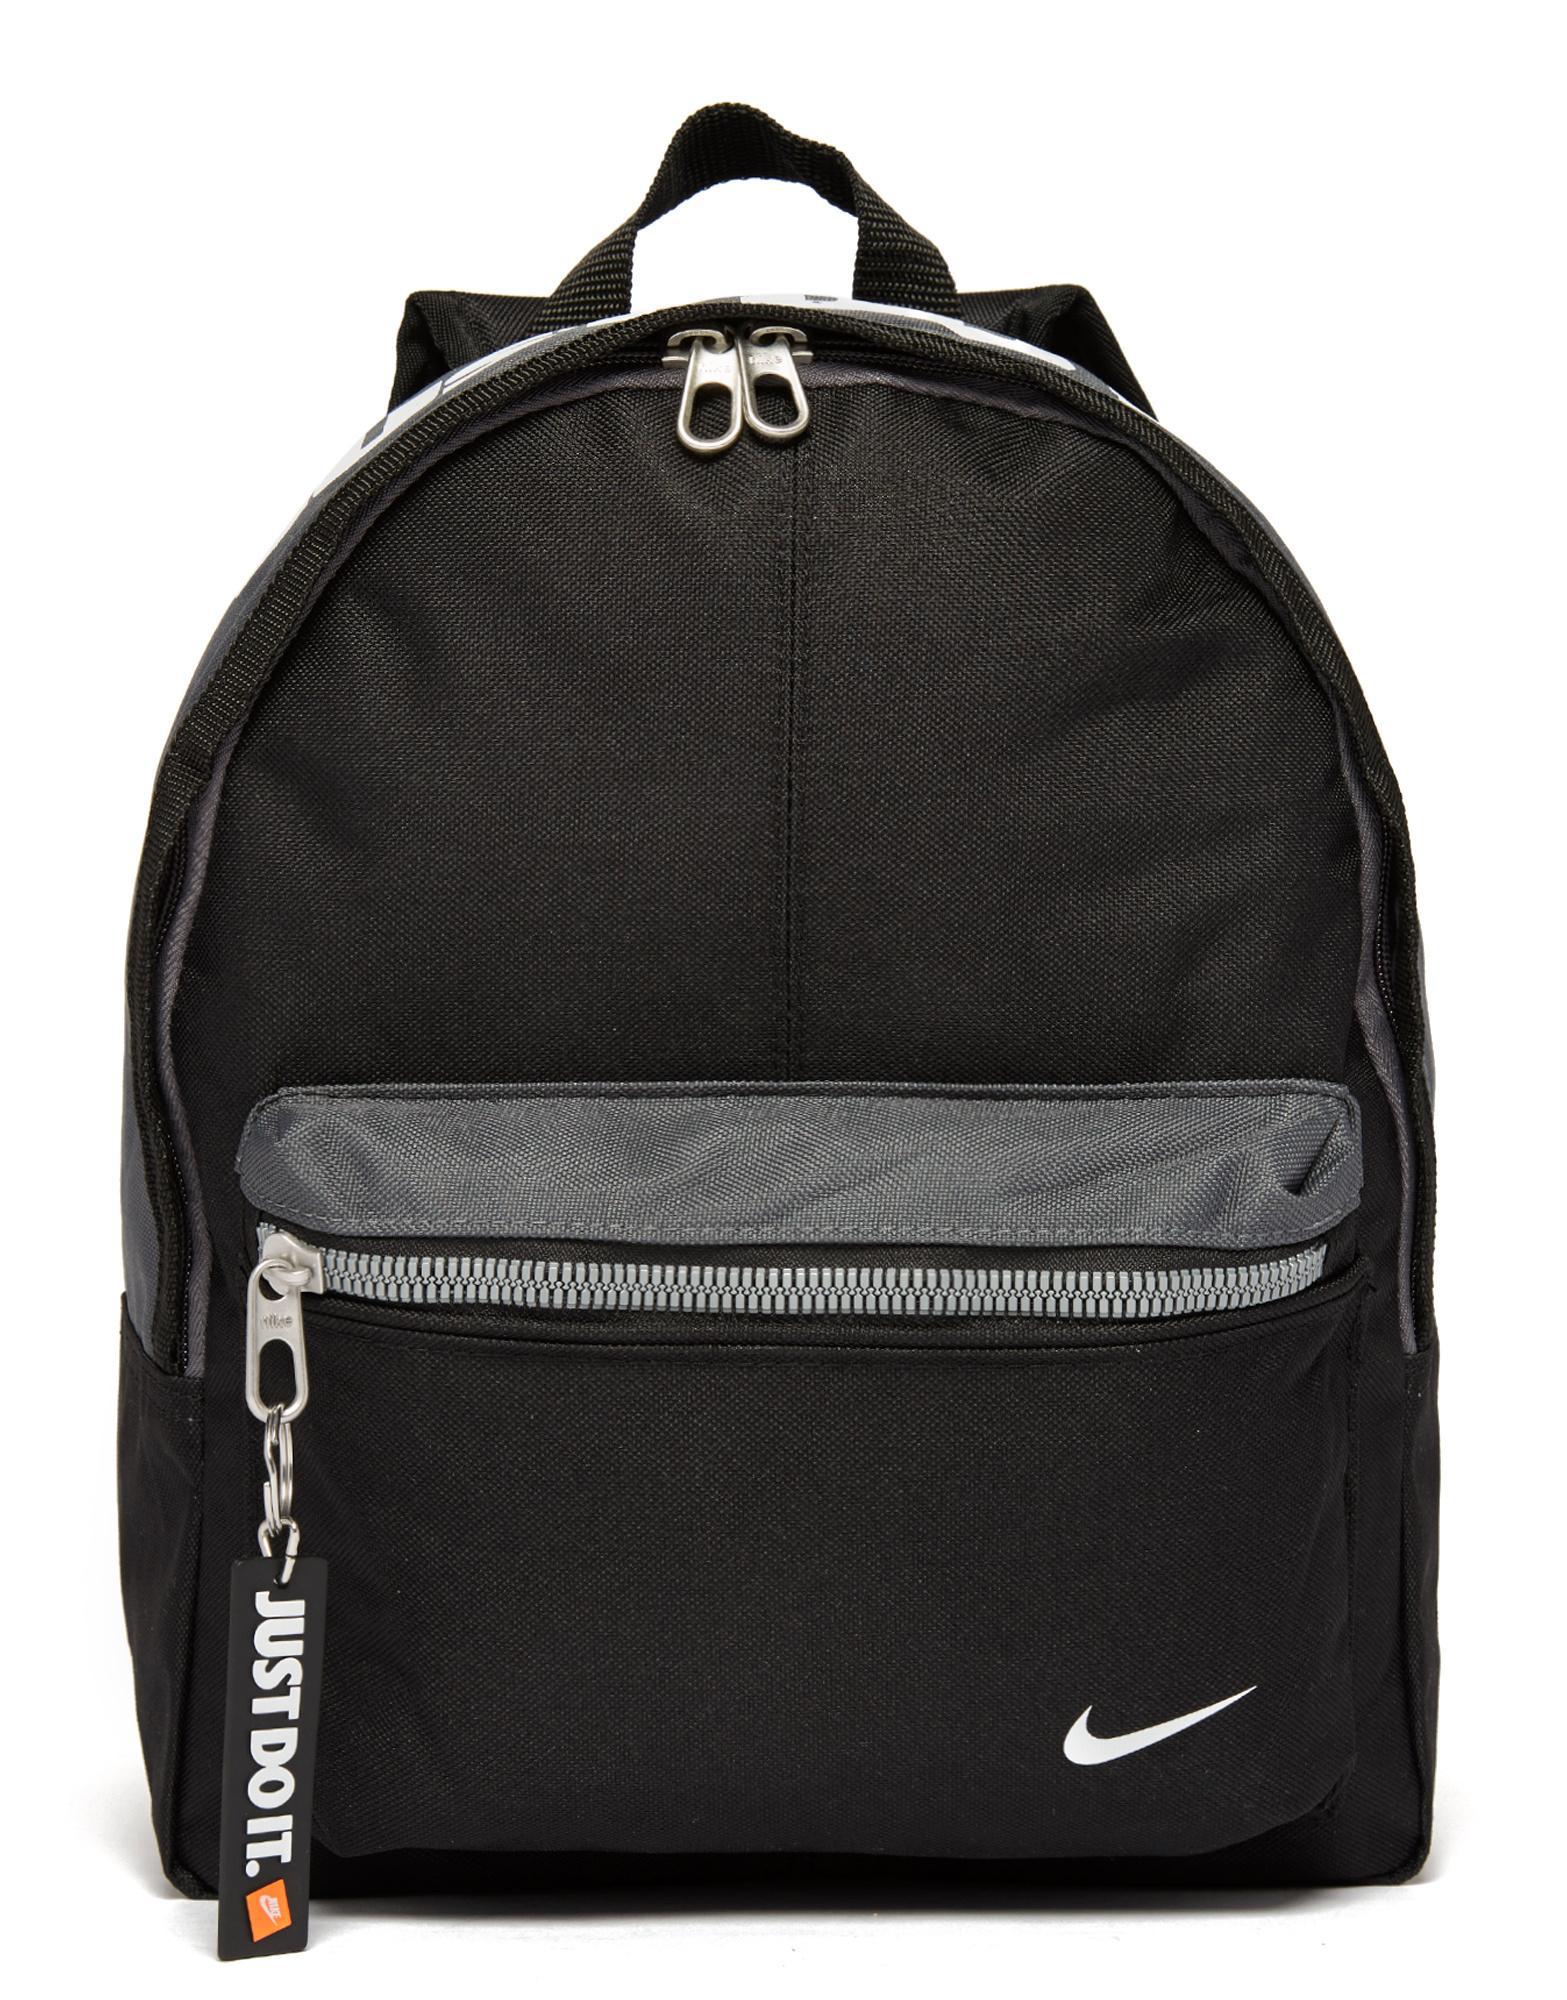 Lyst - Nike Just Do It Mini Backpack in Black for Men